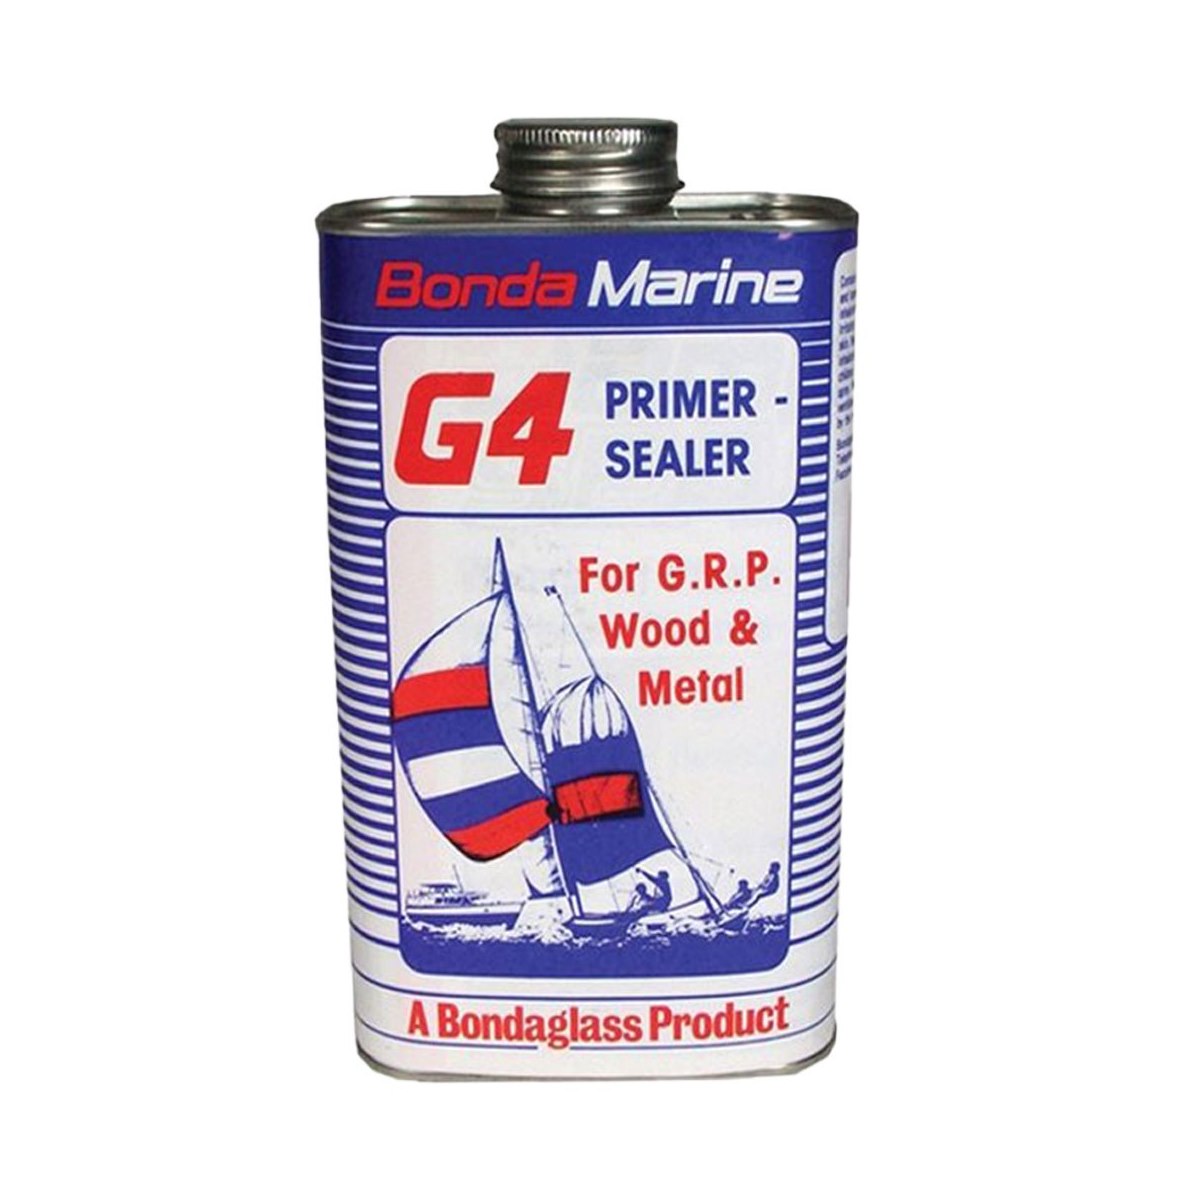 Bonda Marine G4 Primer Sealer 5kg